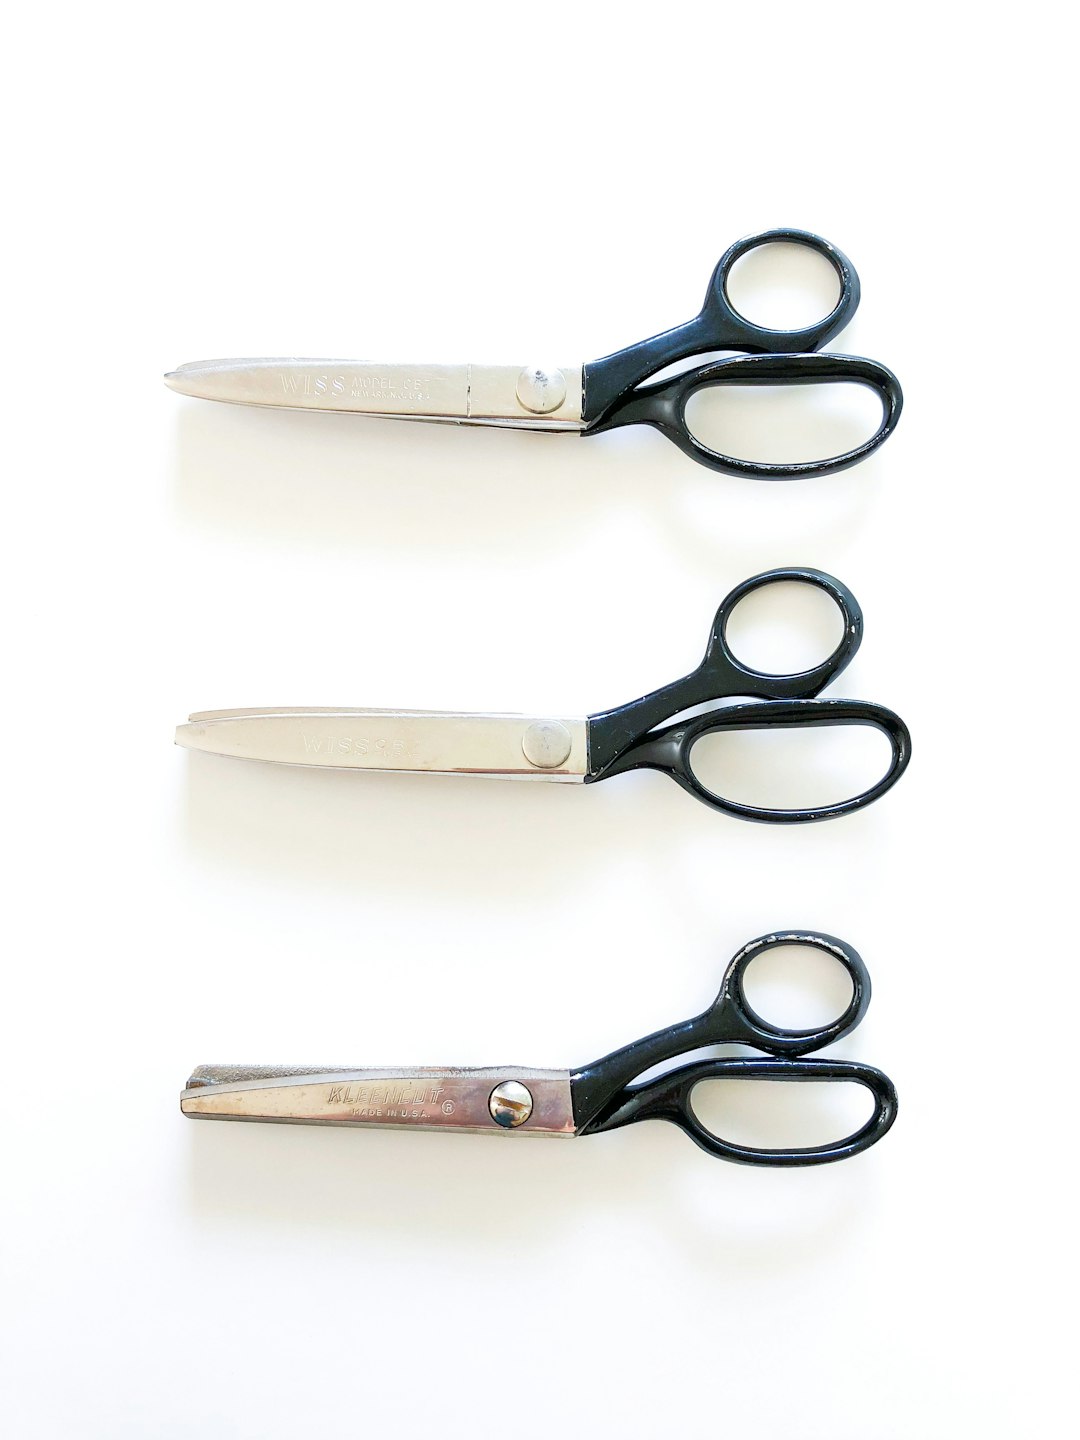 black handled scissors beside brown wooden handle knife